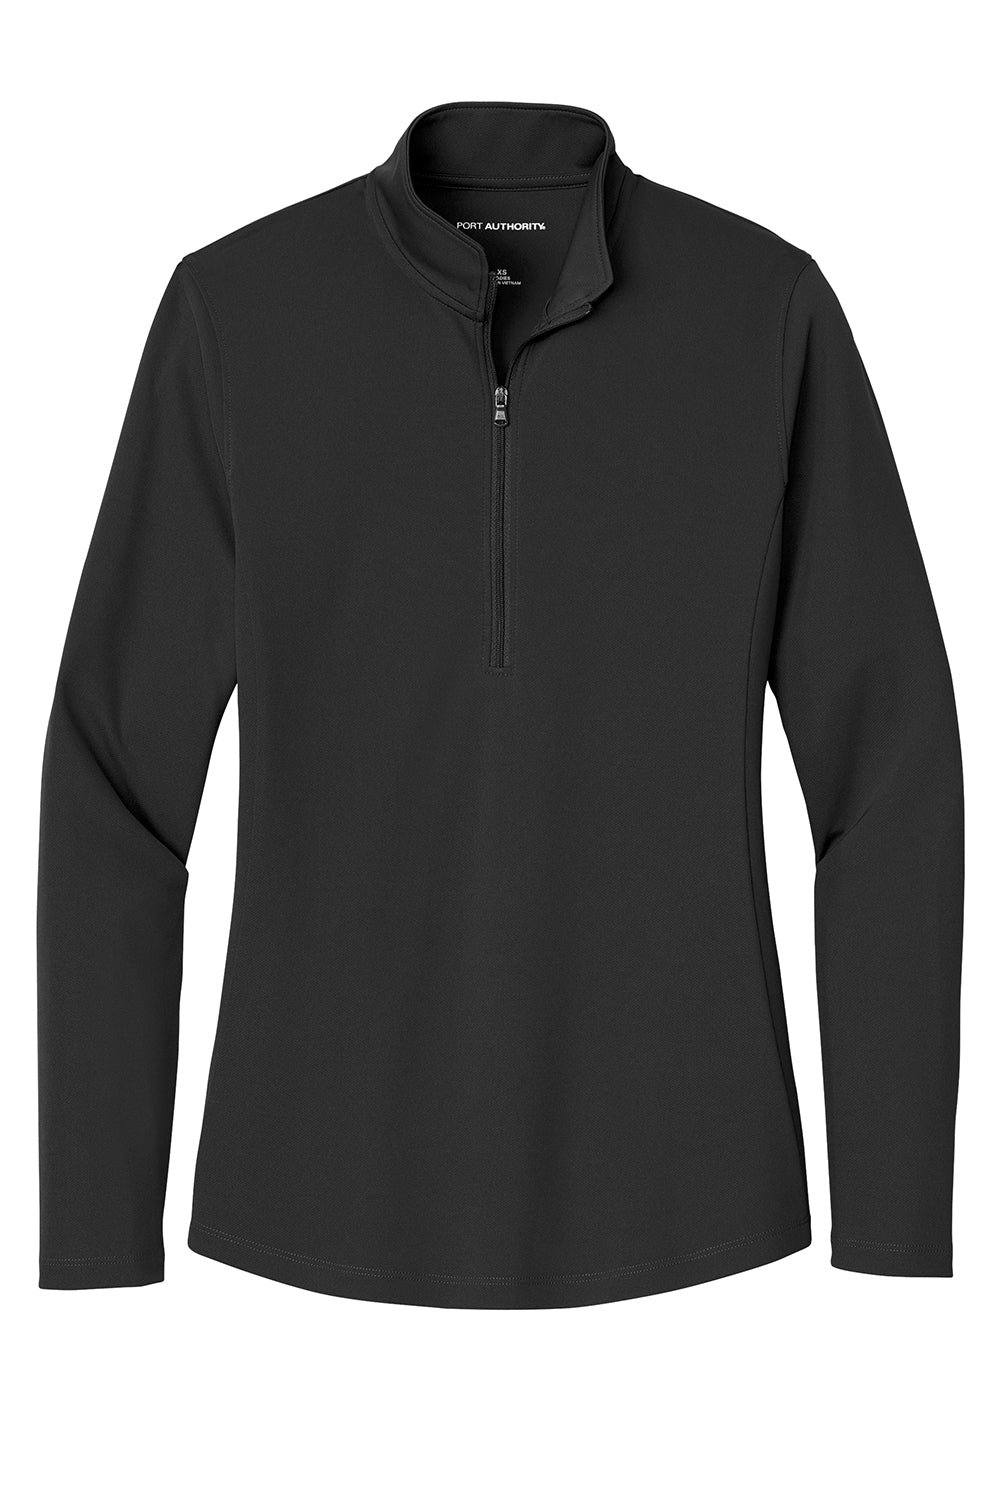 Port Authority LK112 Womens Dry Zone UV Micro Mesh 1/4 Zip Sweatshirt Deep Black Flat Front